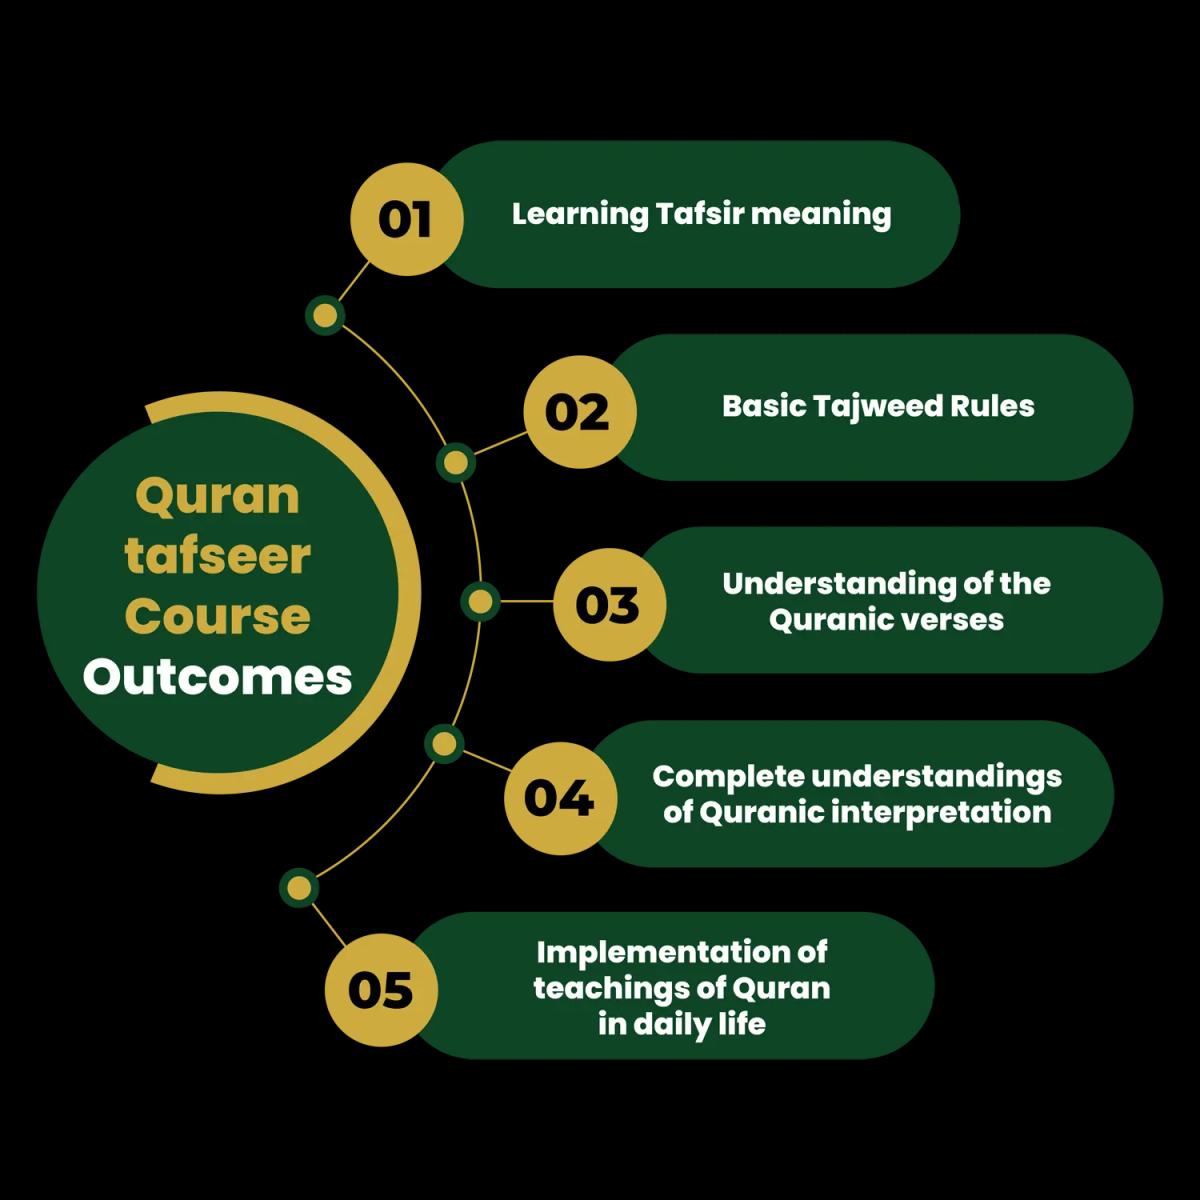 Quran Tafseer course